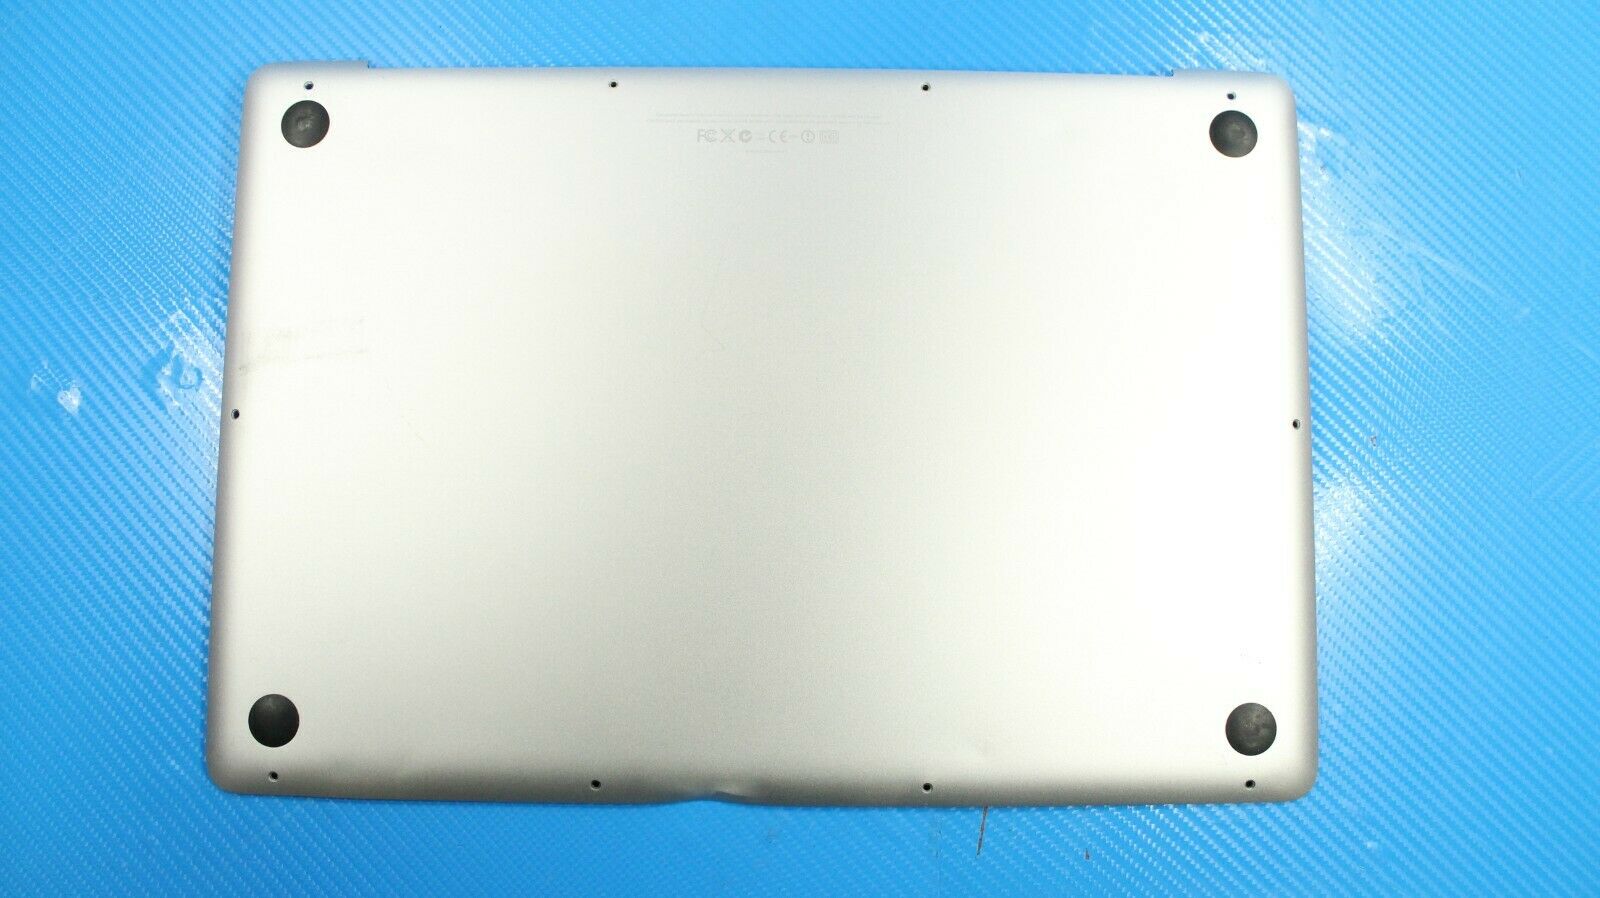 MacBook Pro A1286 MC373LL/A Early 2010 15